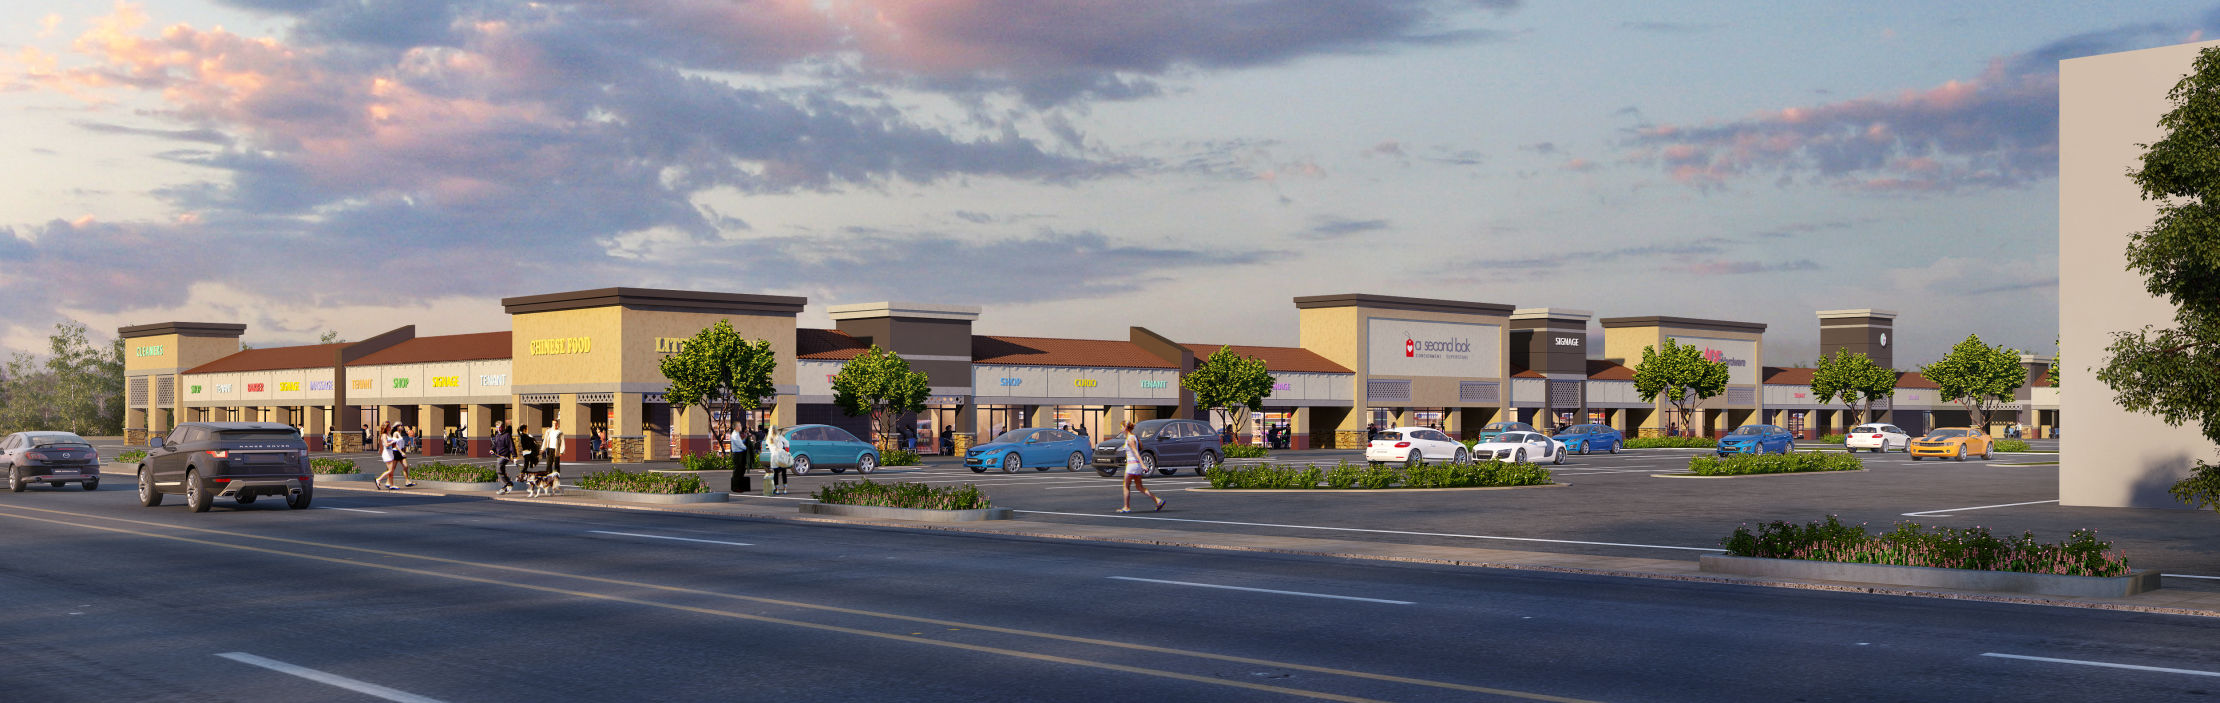 Paradise Hills Shopping Center, Phoenix AZ